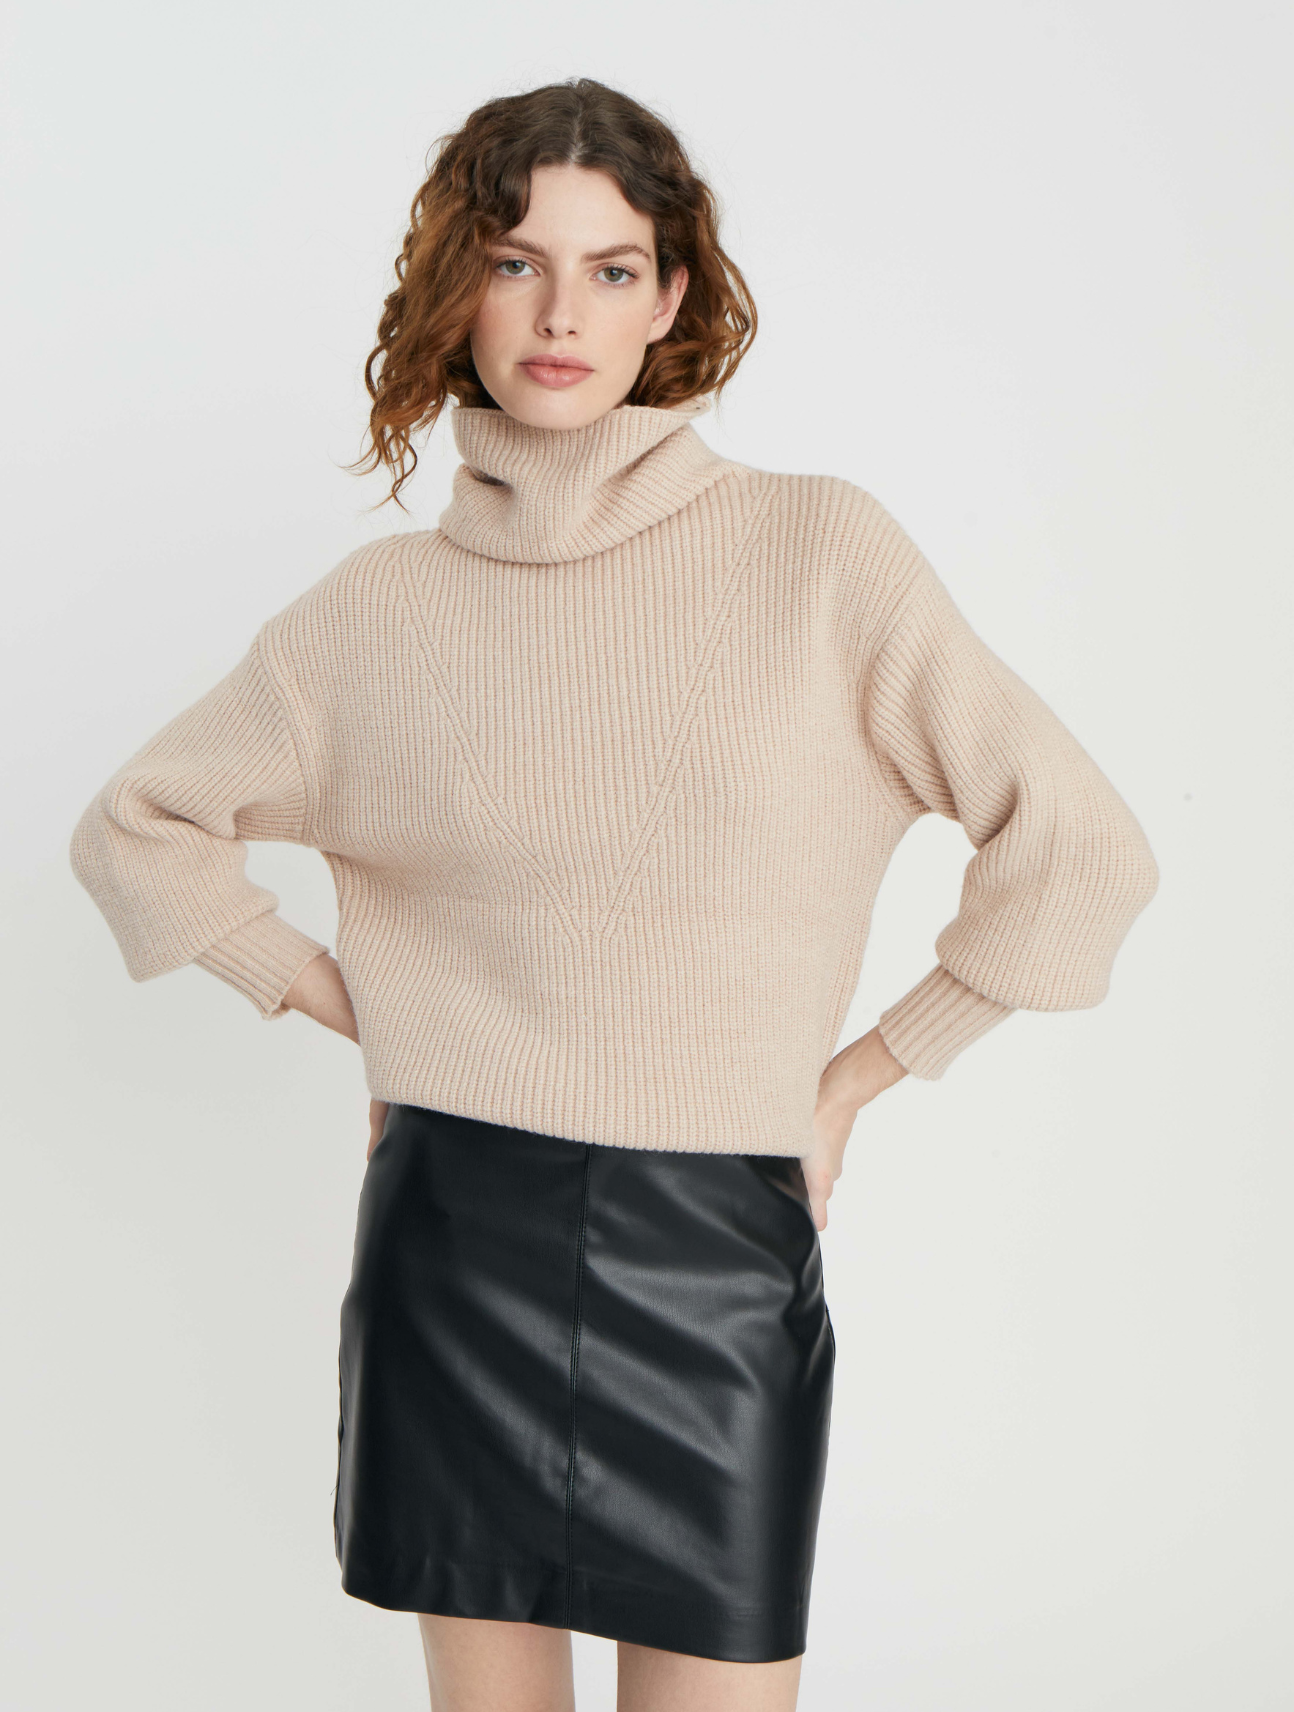 Womens Sweaters & Knits - Sale